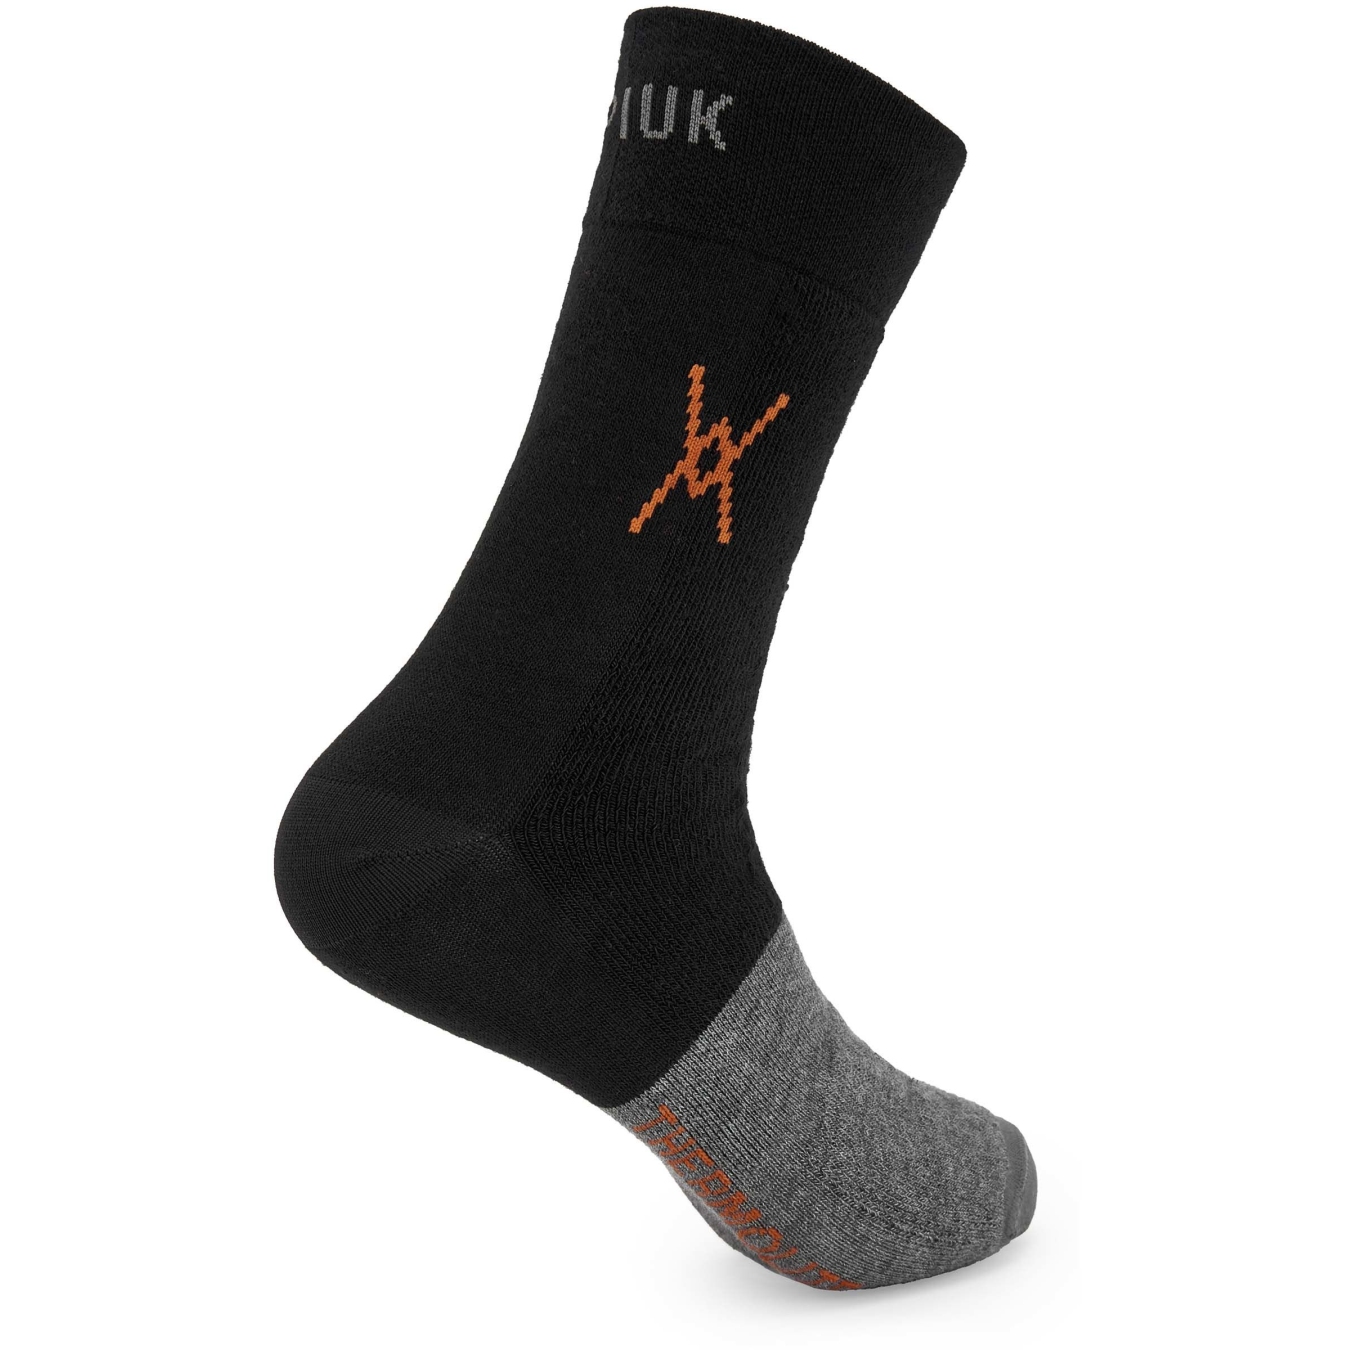 Productfoto van Spiuk ALL TERRAIN Winter Long Socks - black